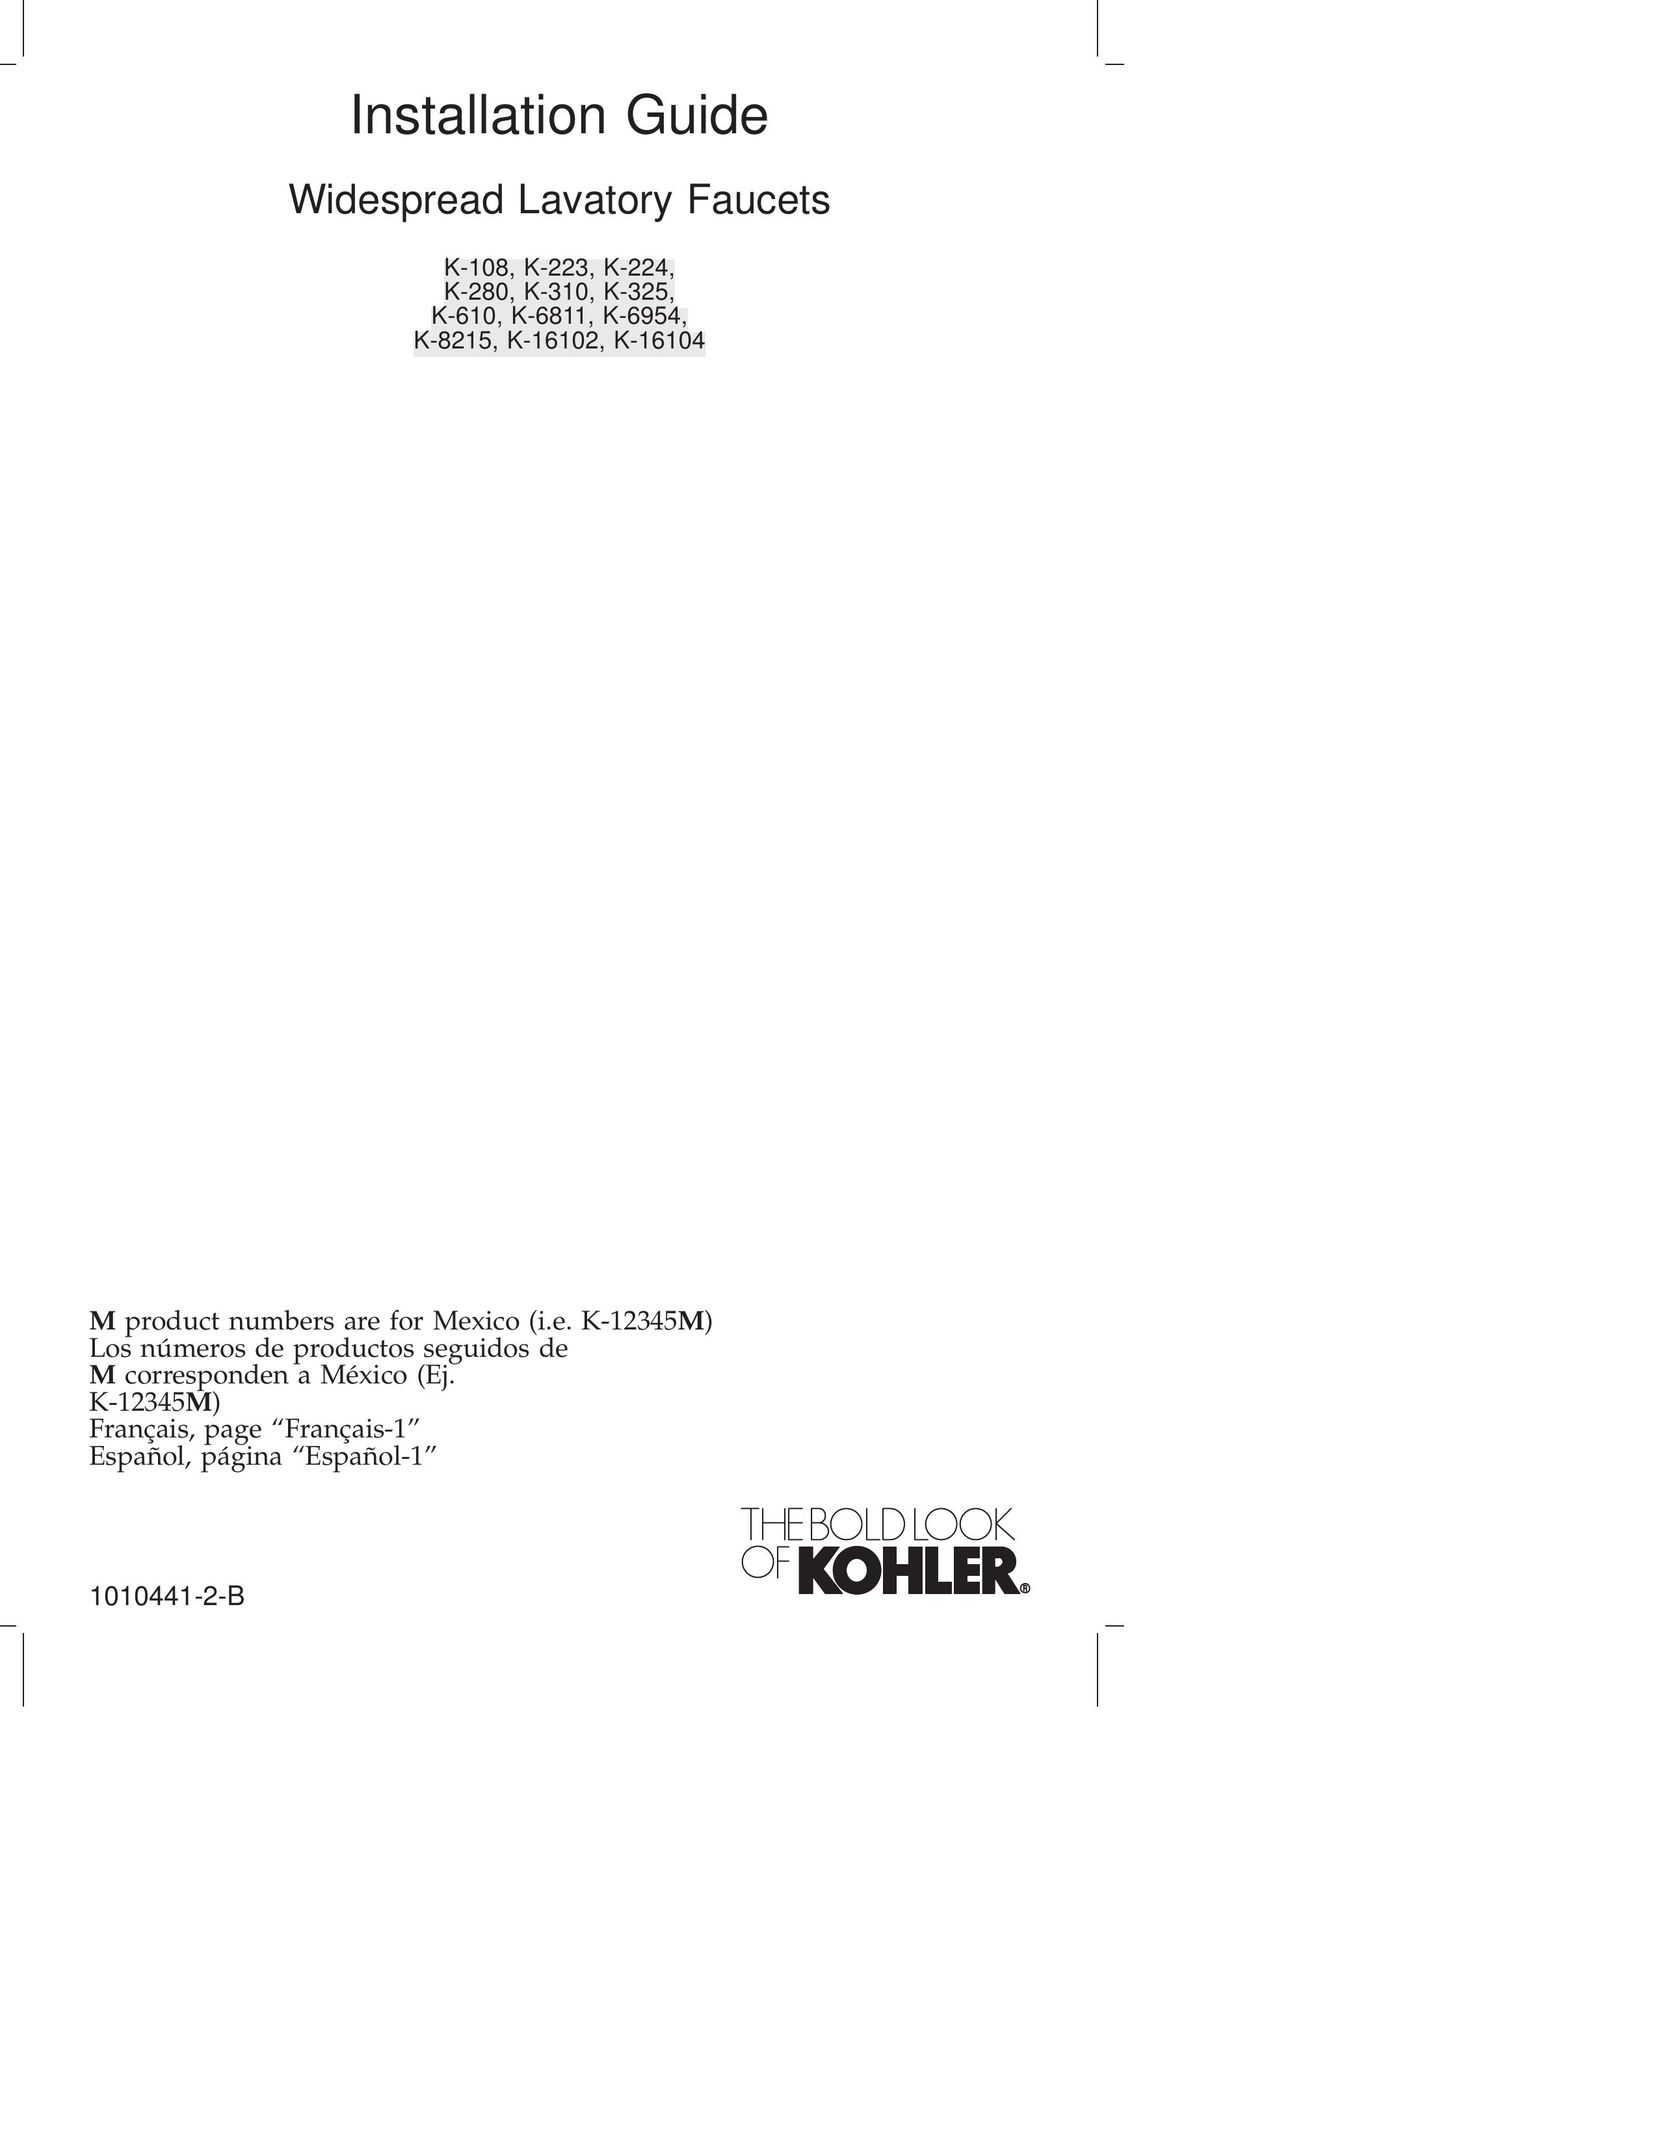 Kohler K-108 Plumbing Product User Manual